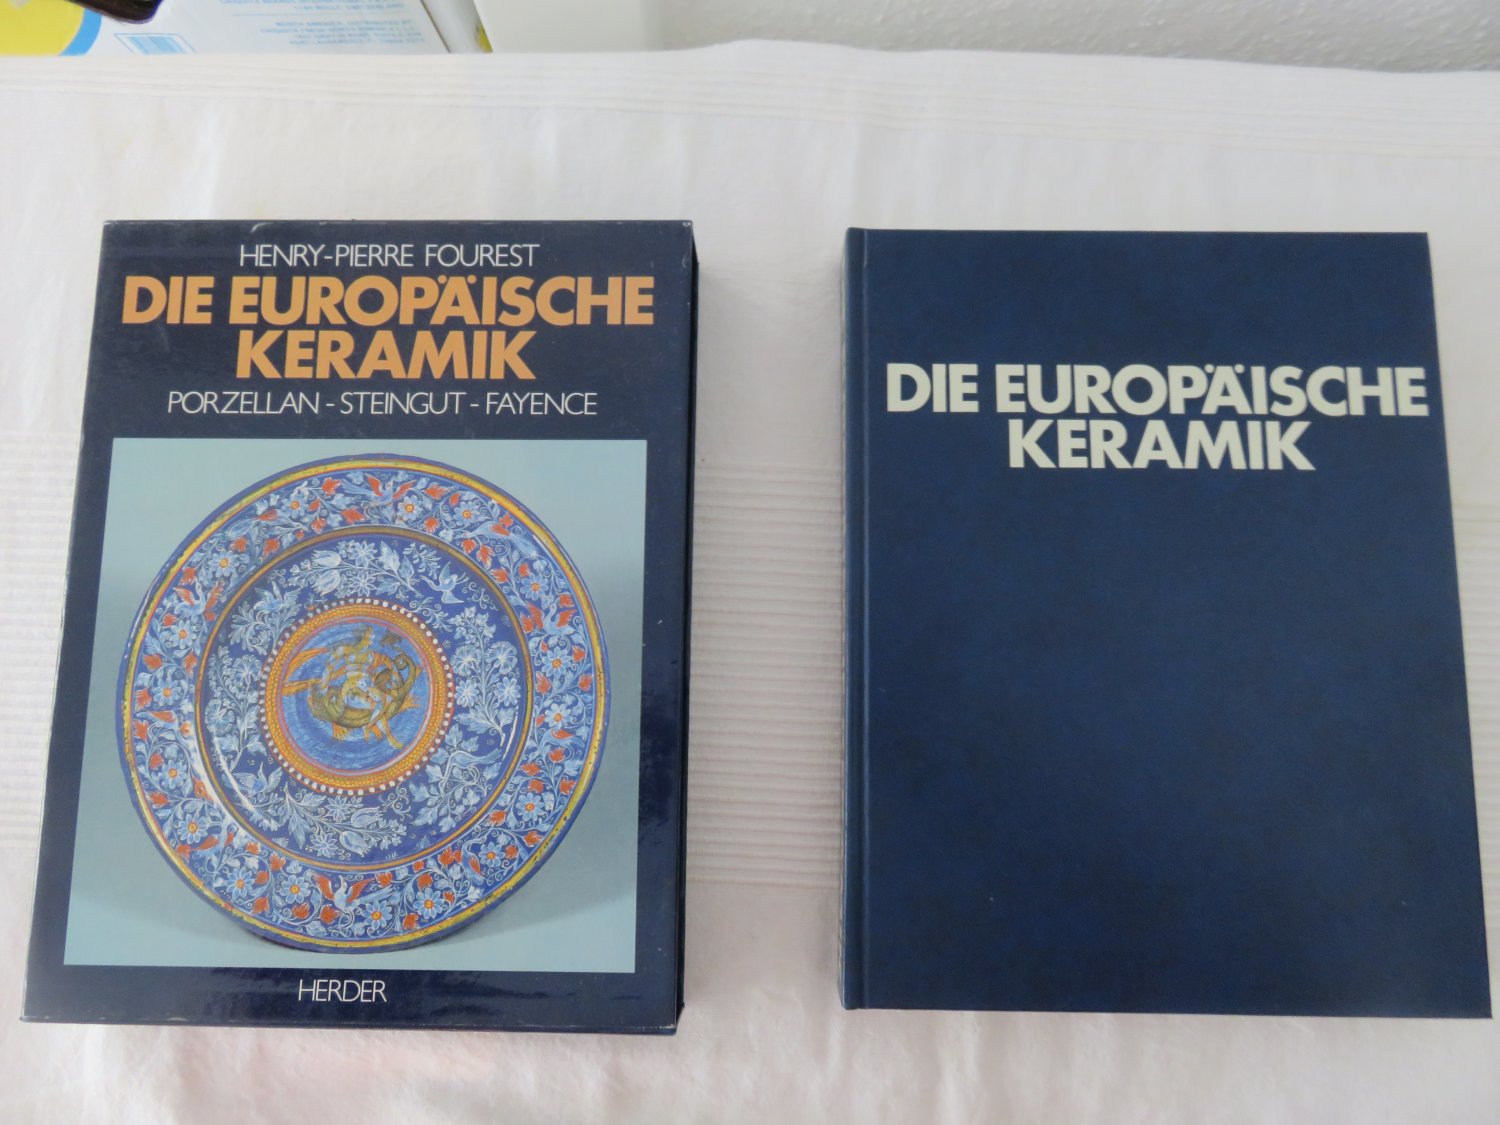 Fachbuch Europäische Keramik seit 1950 incl STARK REDUZIERT NEU und OVP Marken